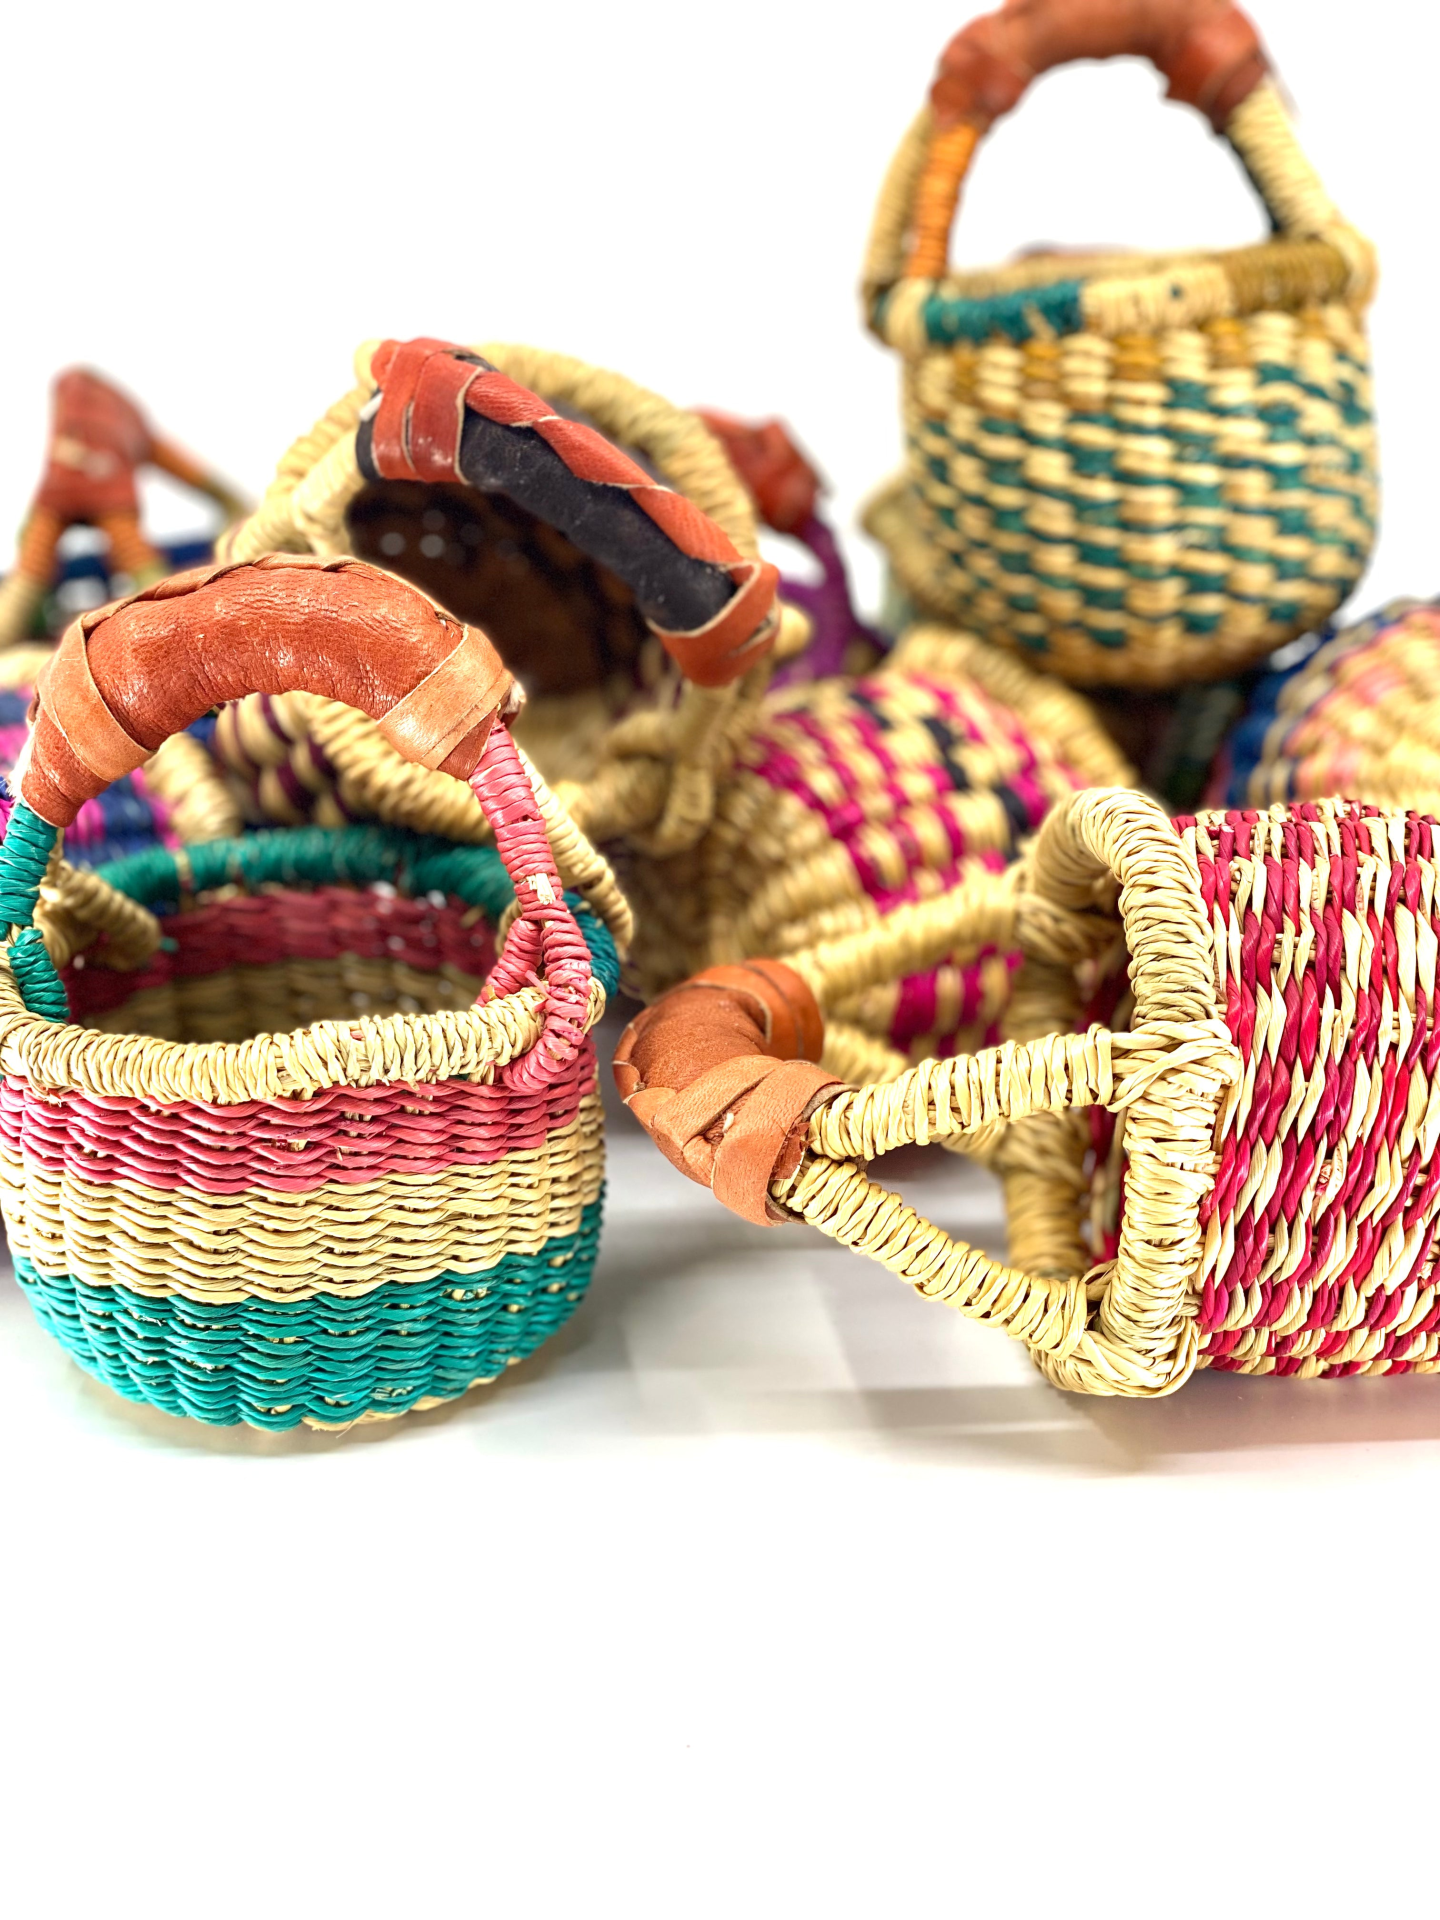 Mini Bolga Baskets, 3” - 4”